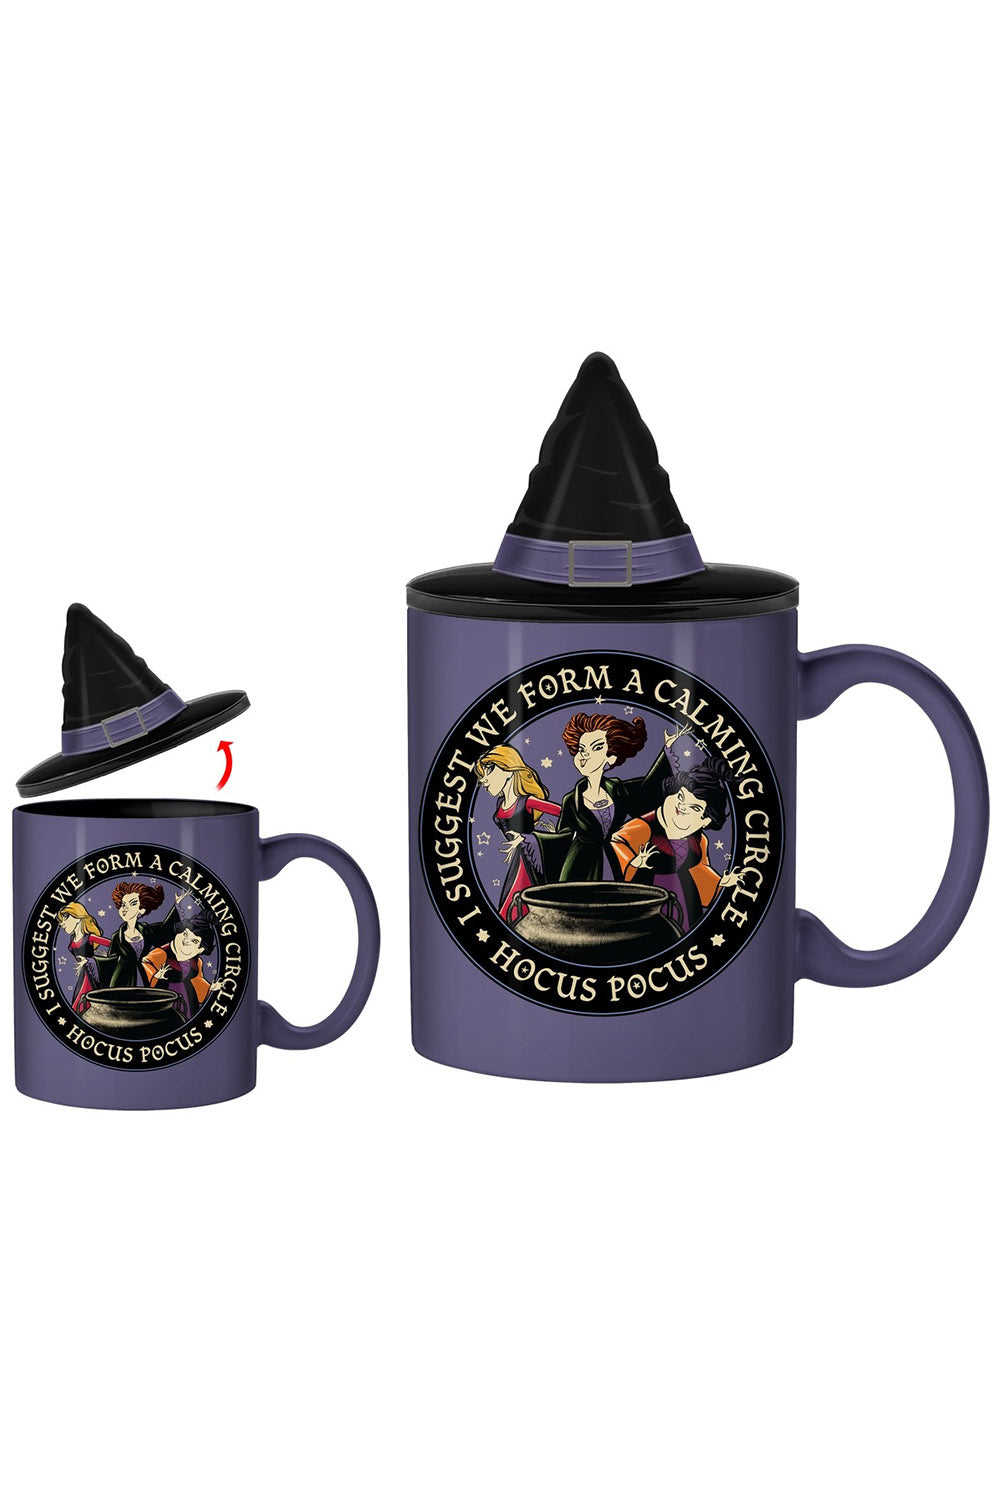 sanderson sisiters hocus pocus disney coffee mug